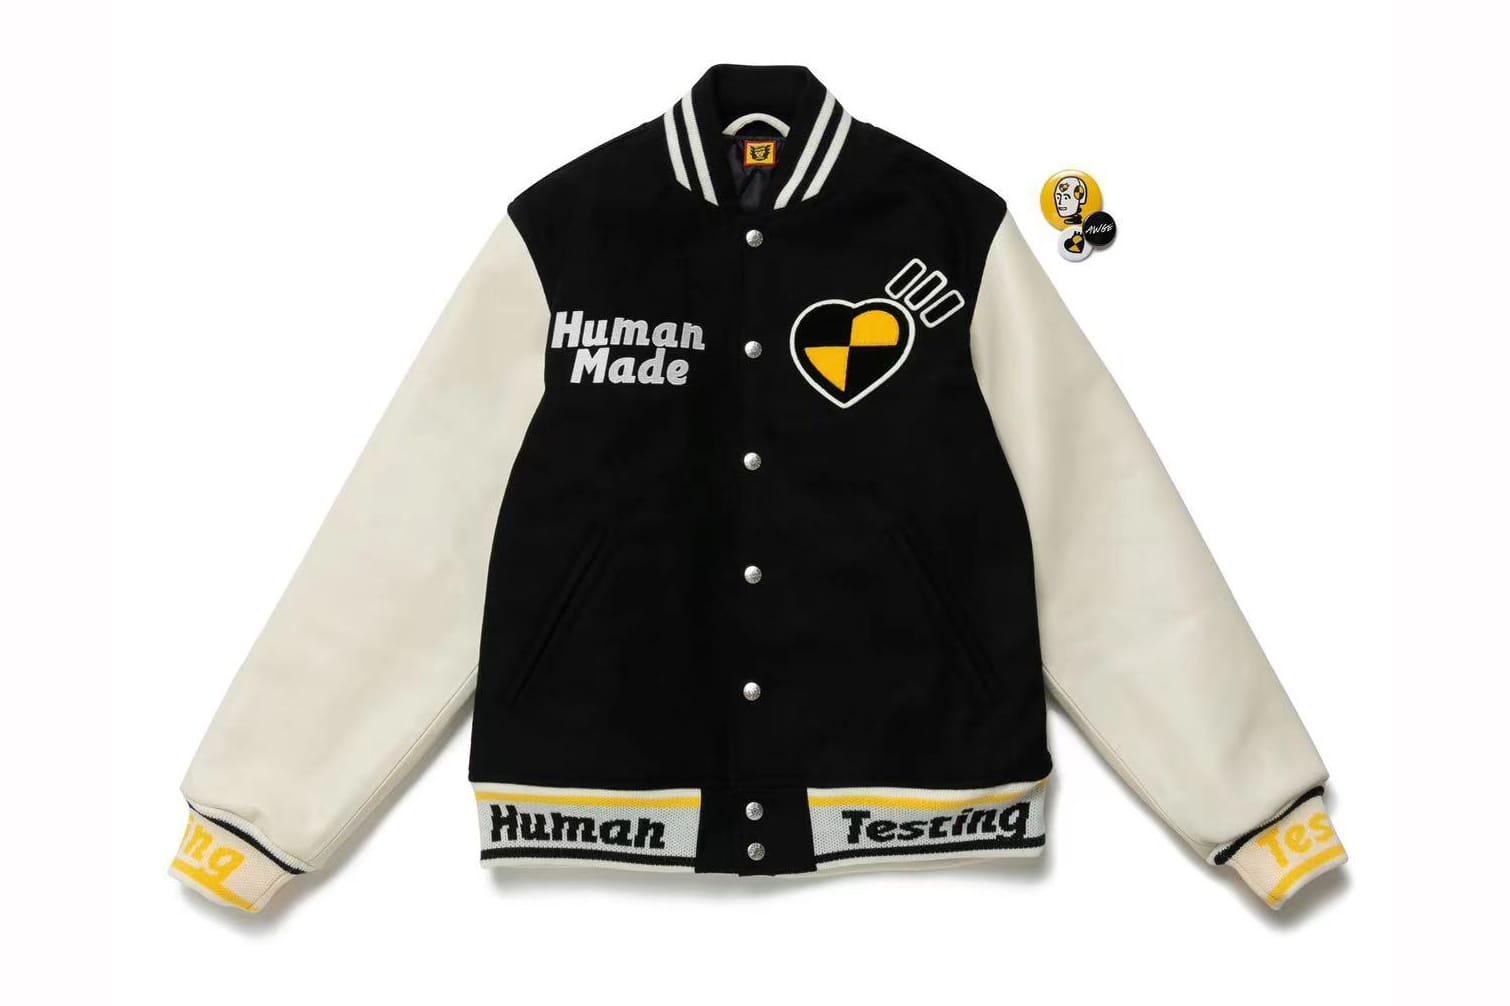 ASAP Rocky x HUMAN MADE 全新「Human Testing」联名系列发售信息公布 